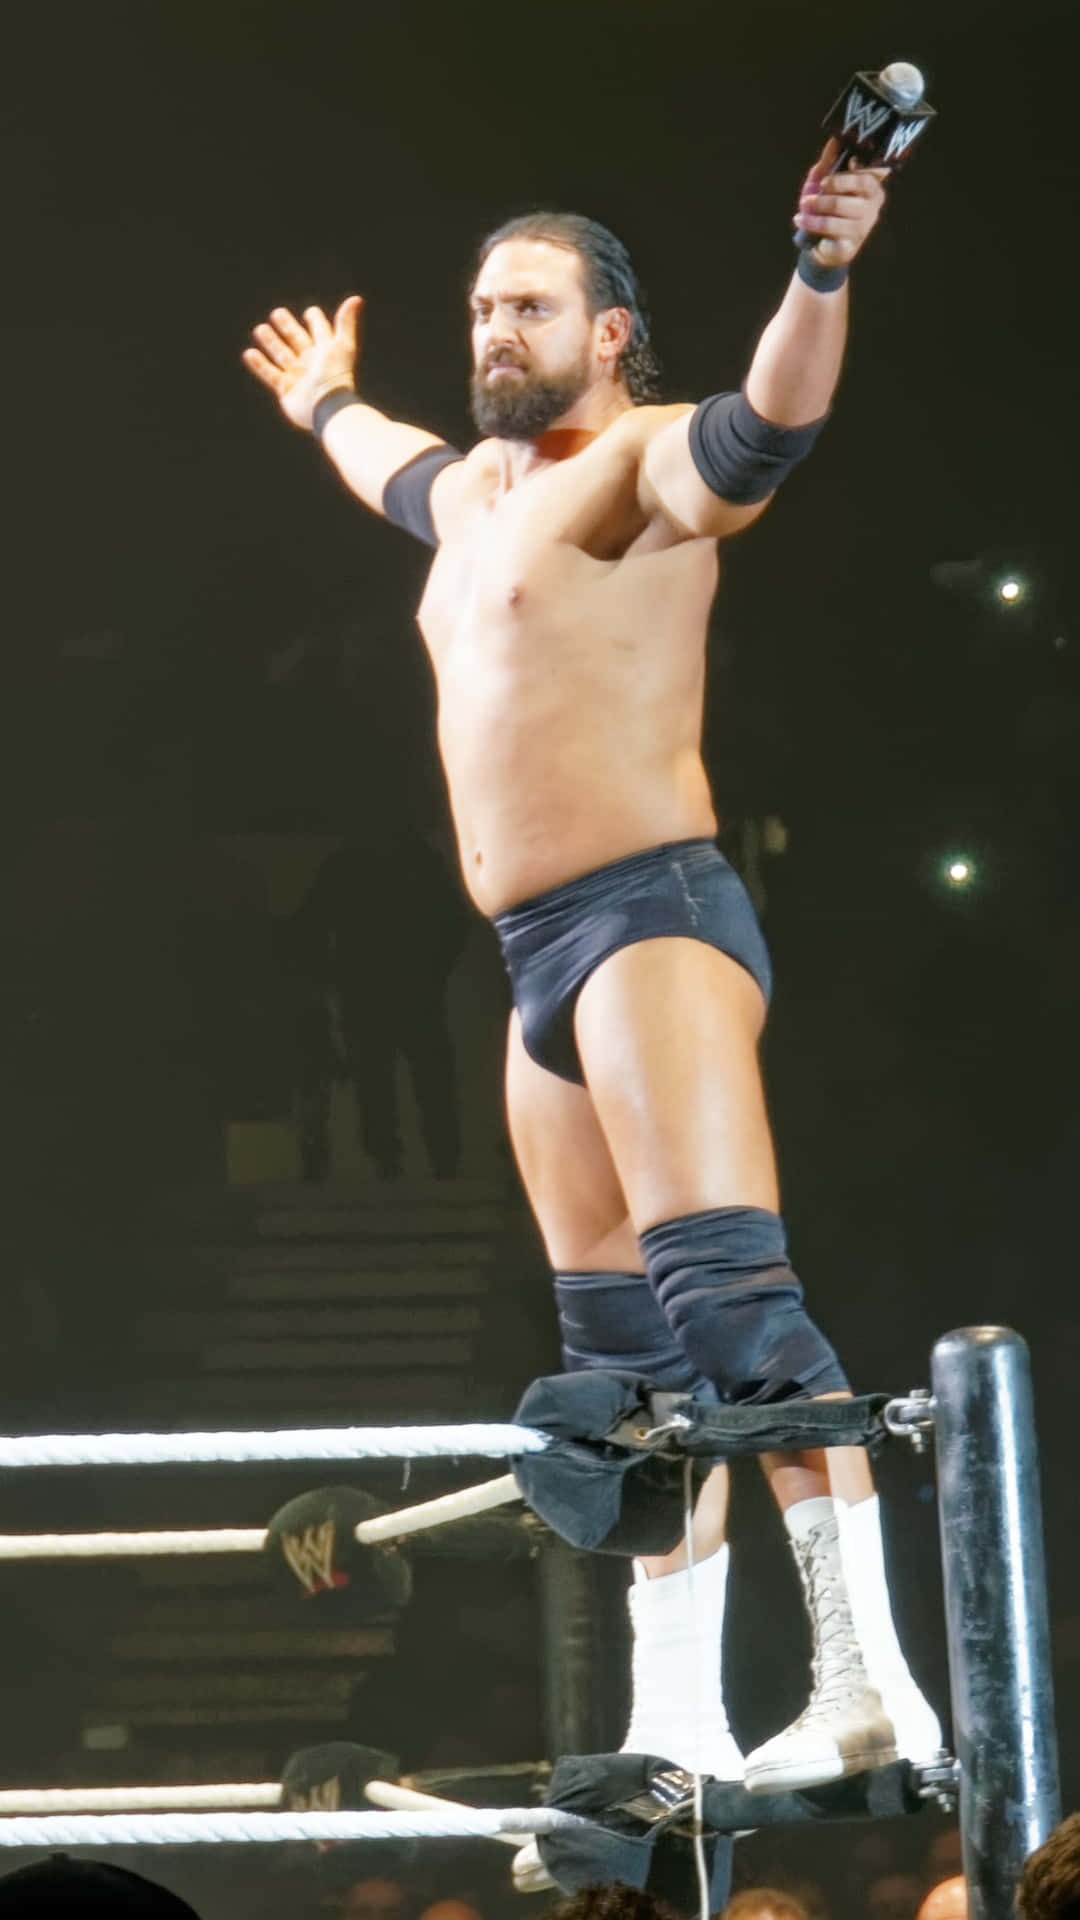 Amerikansk professionel wrestler Damien Sandow I aktion 2013. Wallpaper